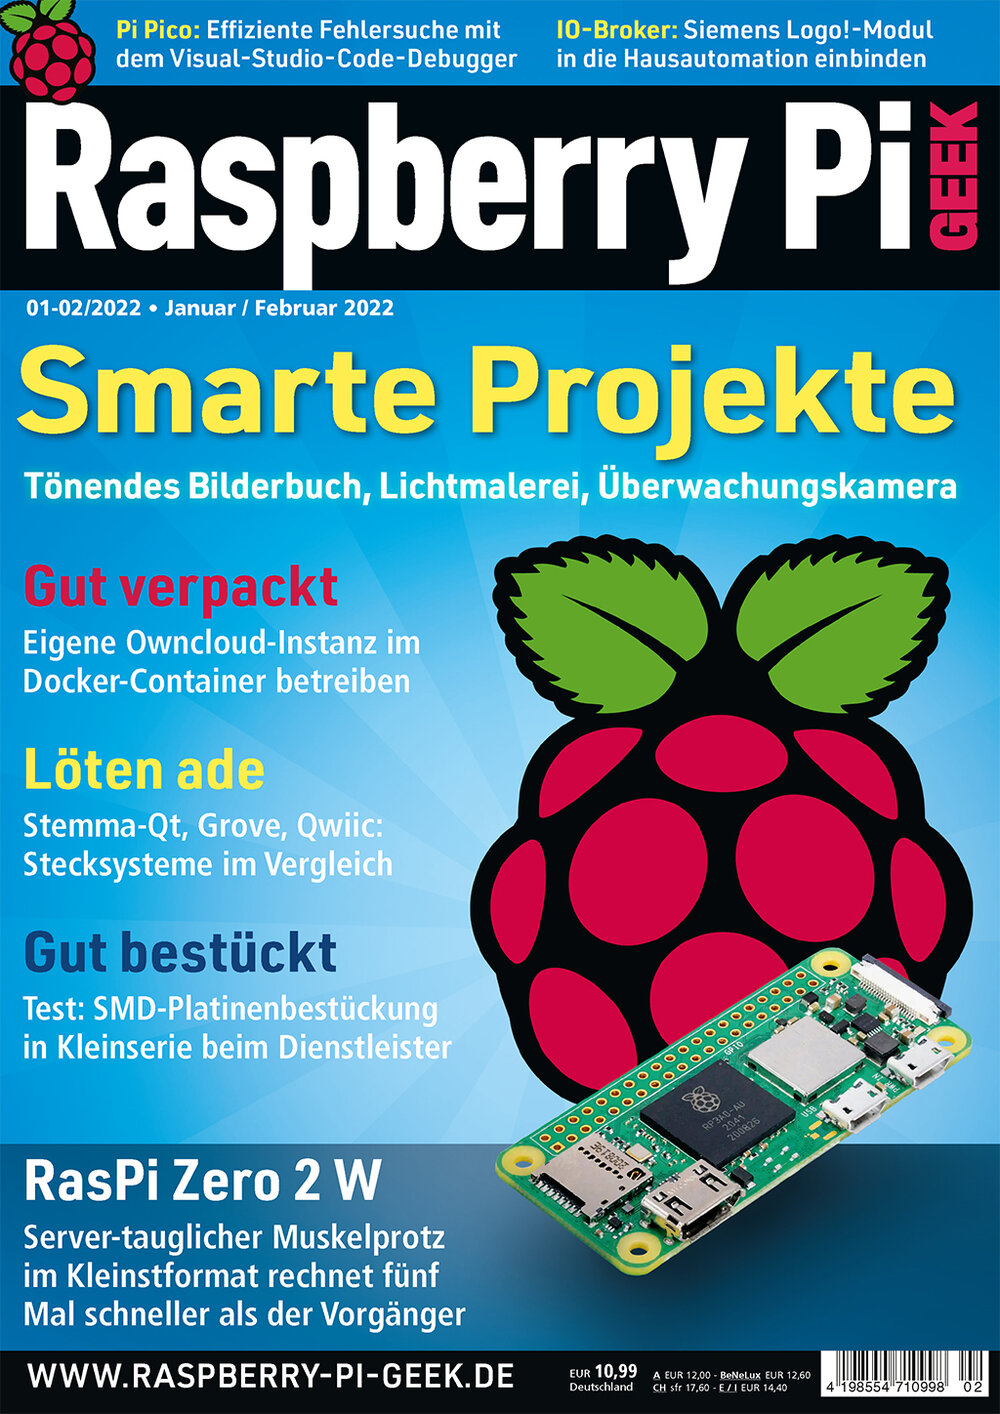 Raspberry Pi Geek ePaper 02/2022